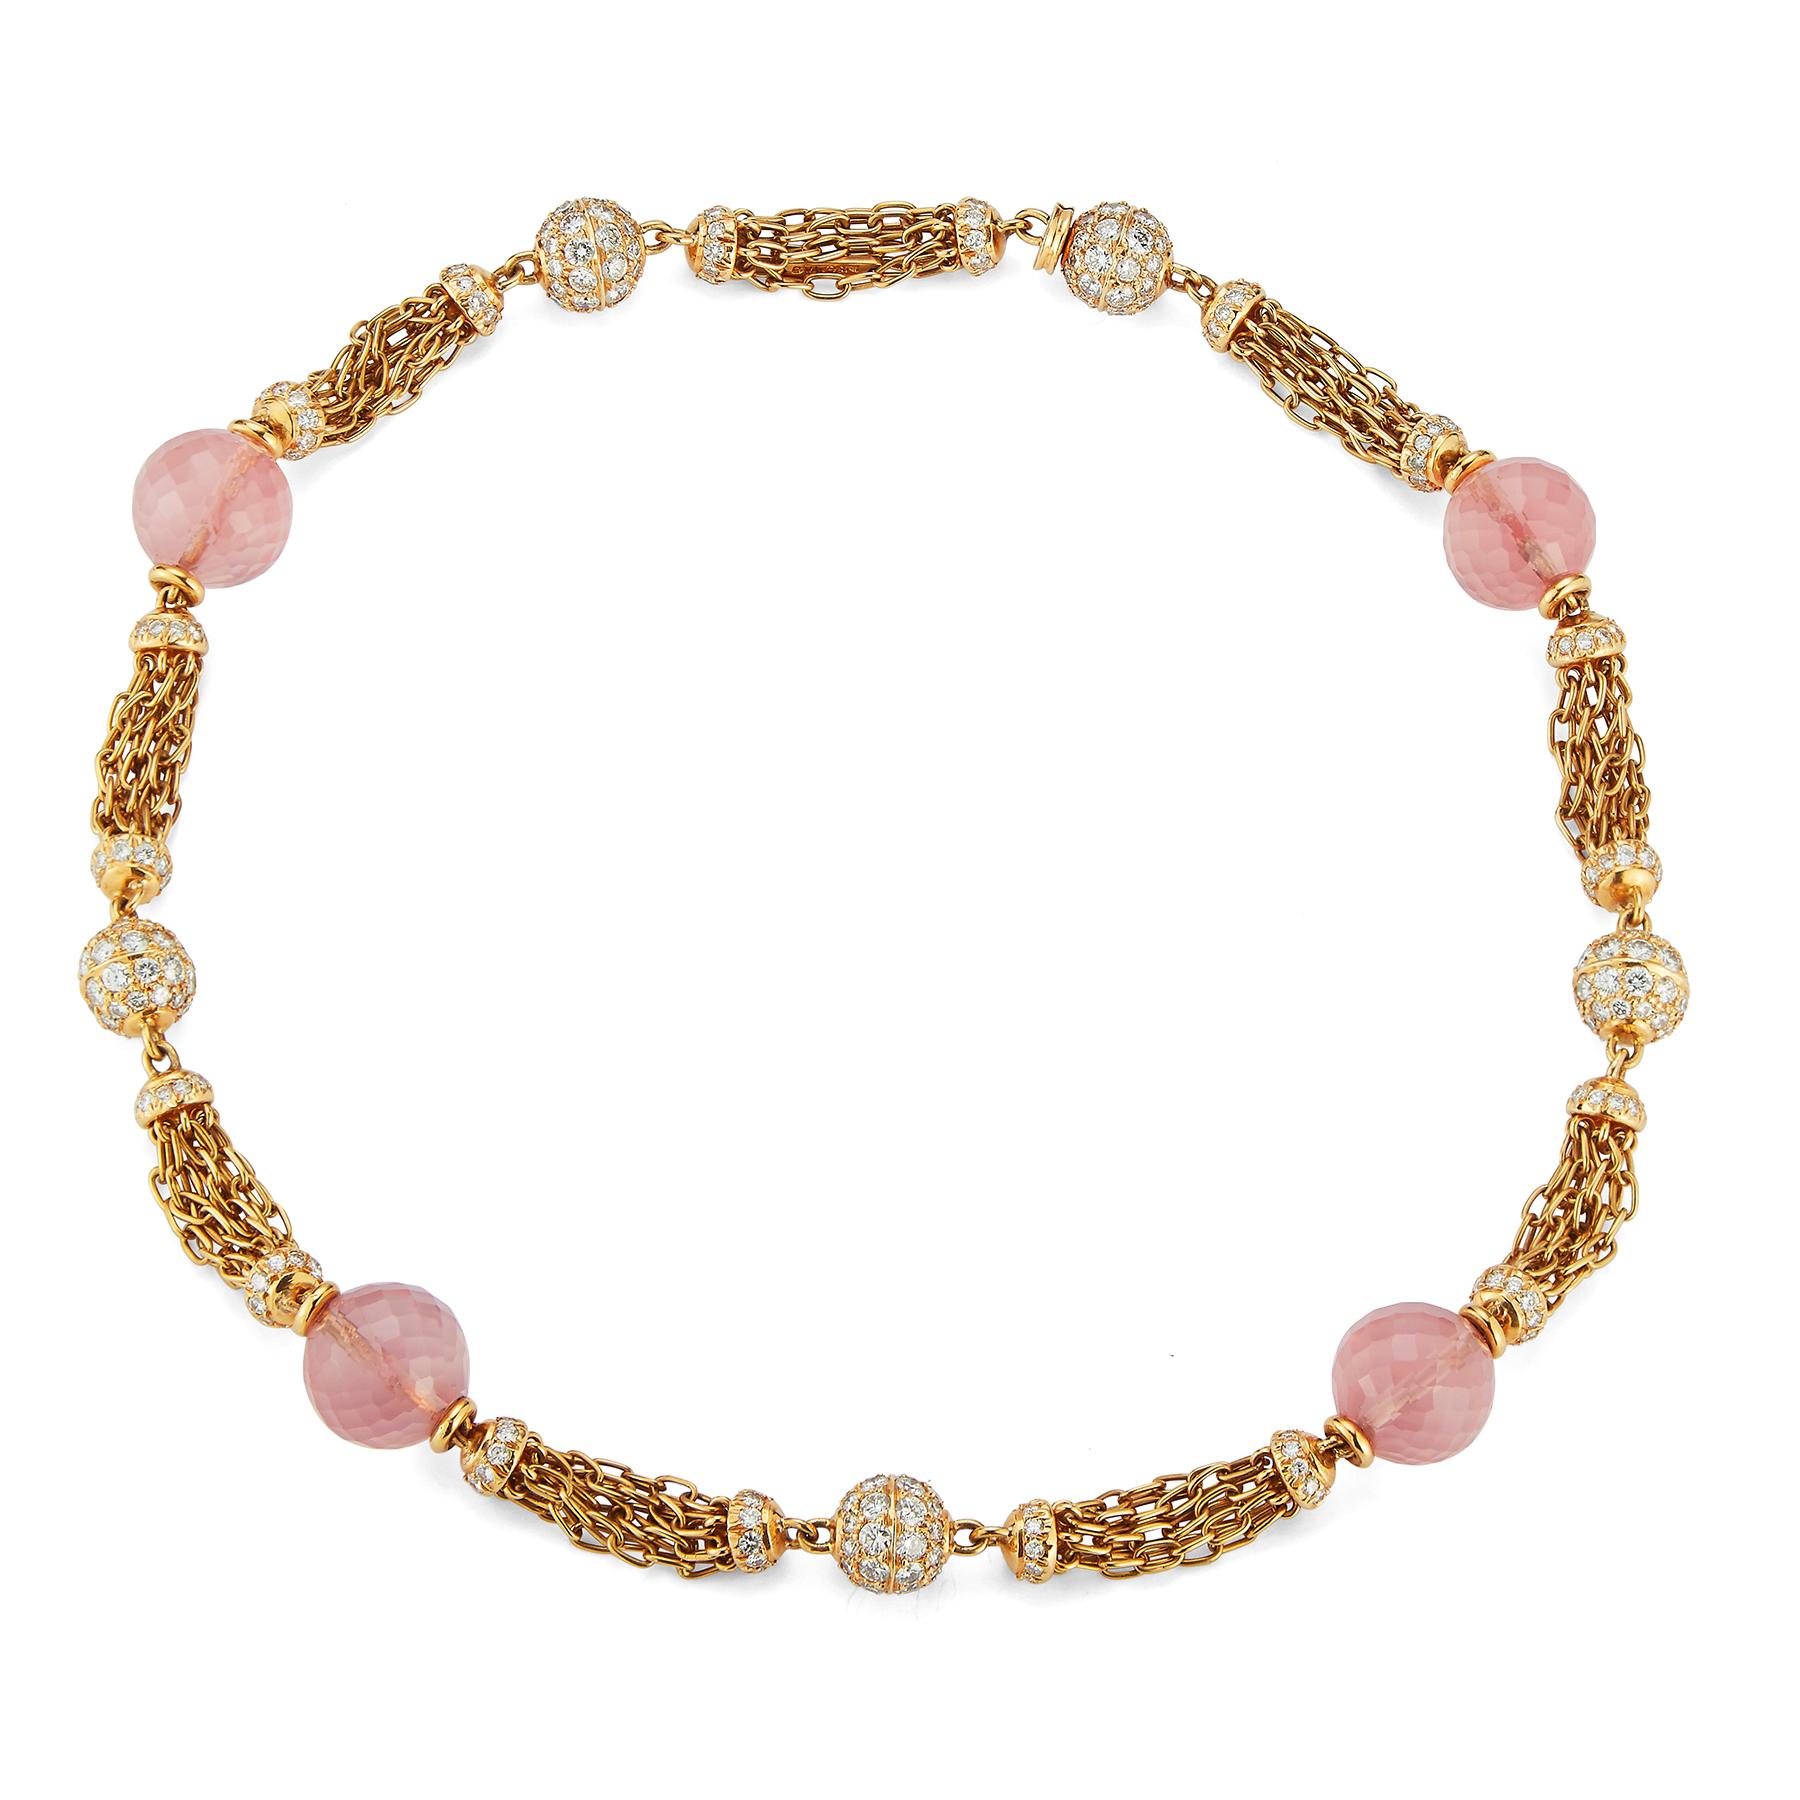 Bulgari Rose Quartz & Diamond Necklace

Rose quartz beads set with diamonds & gold links.

Measurements: 16